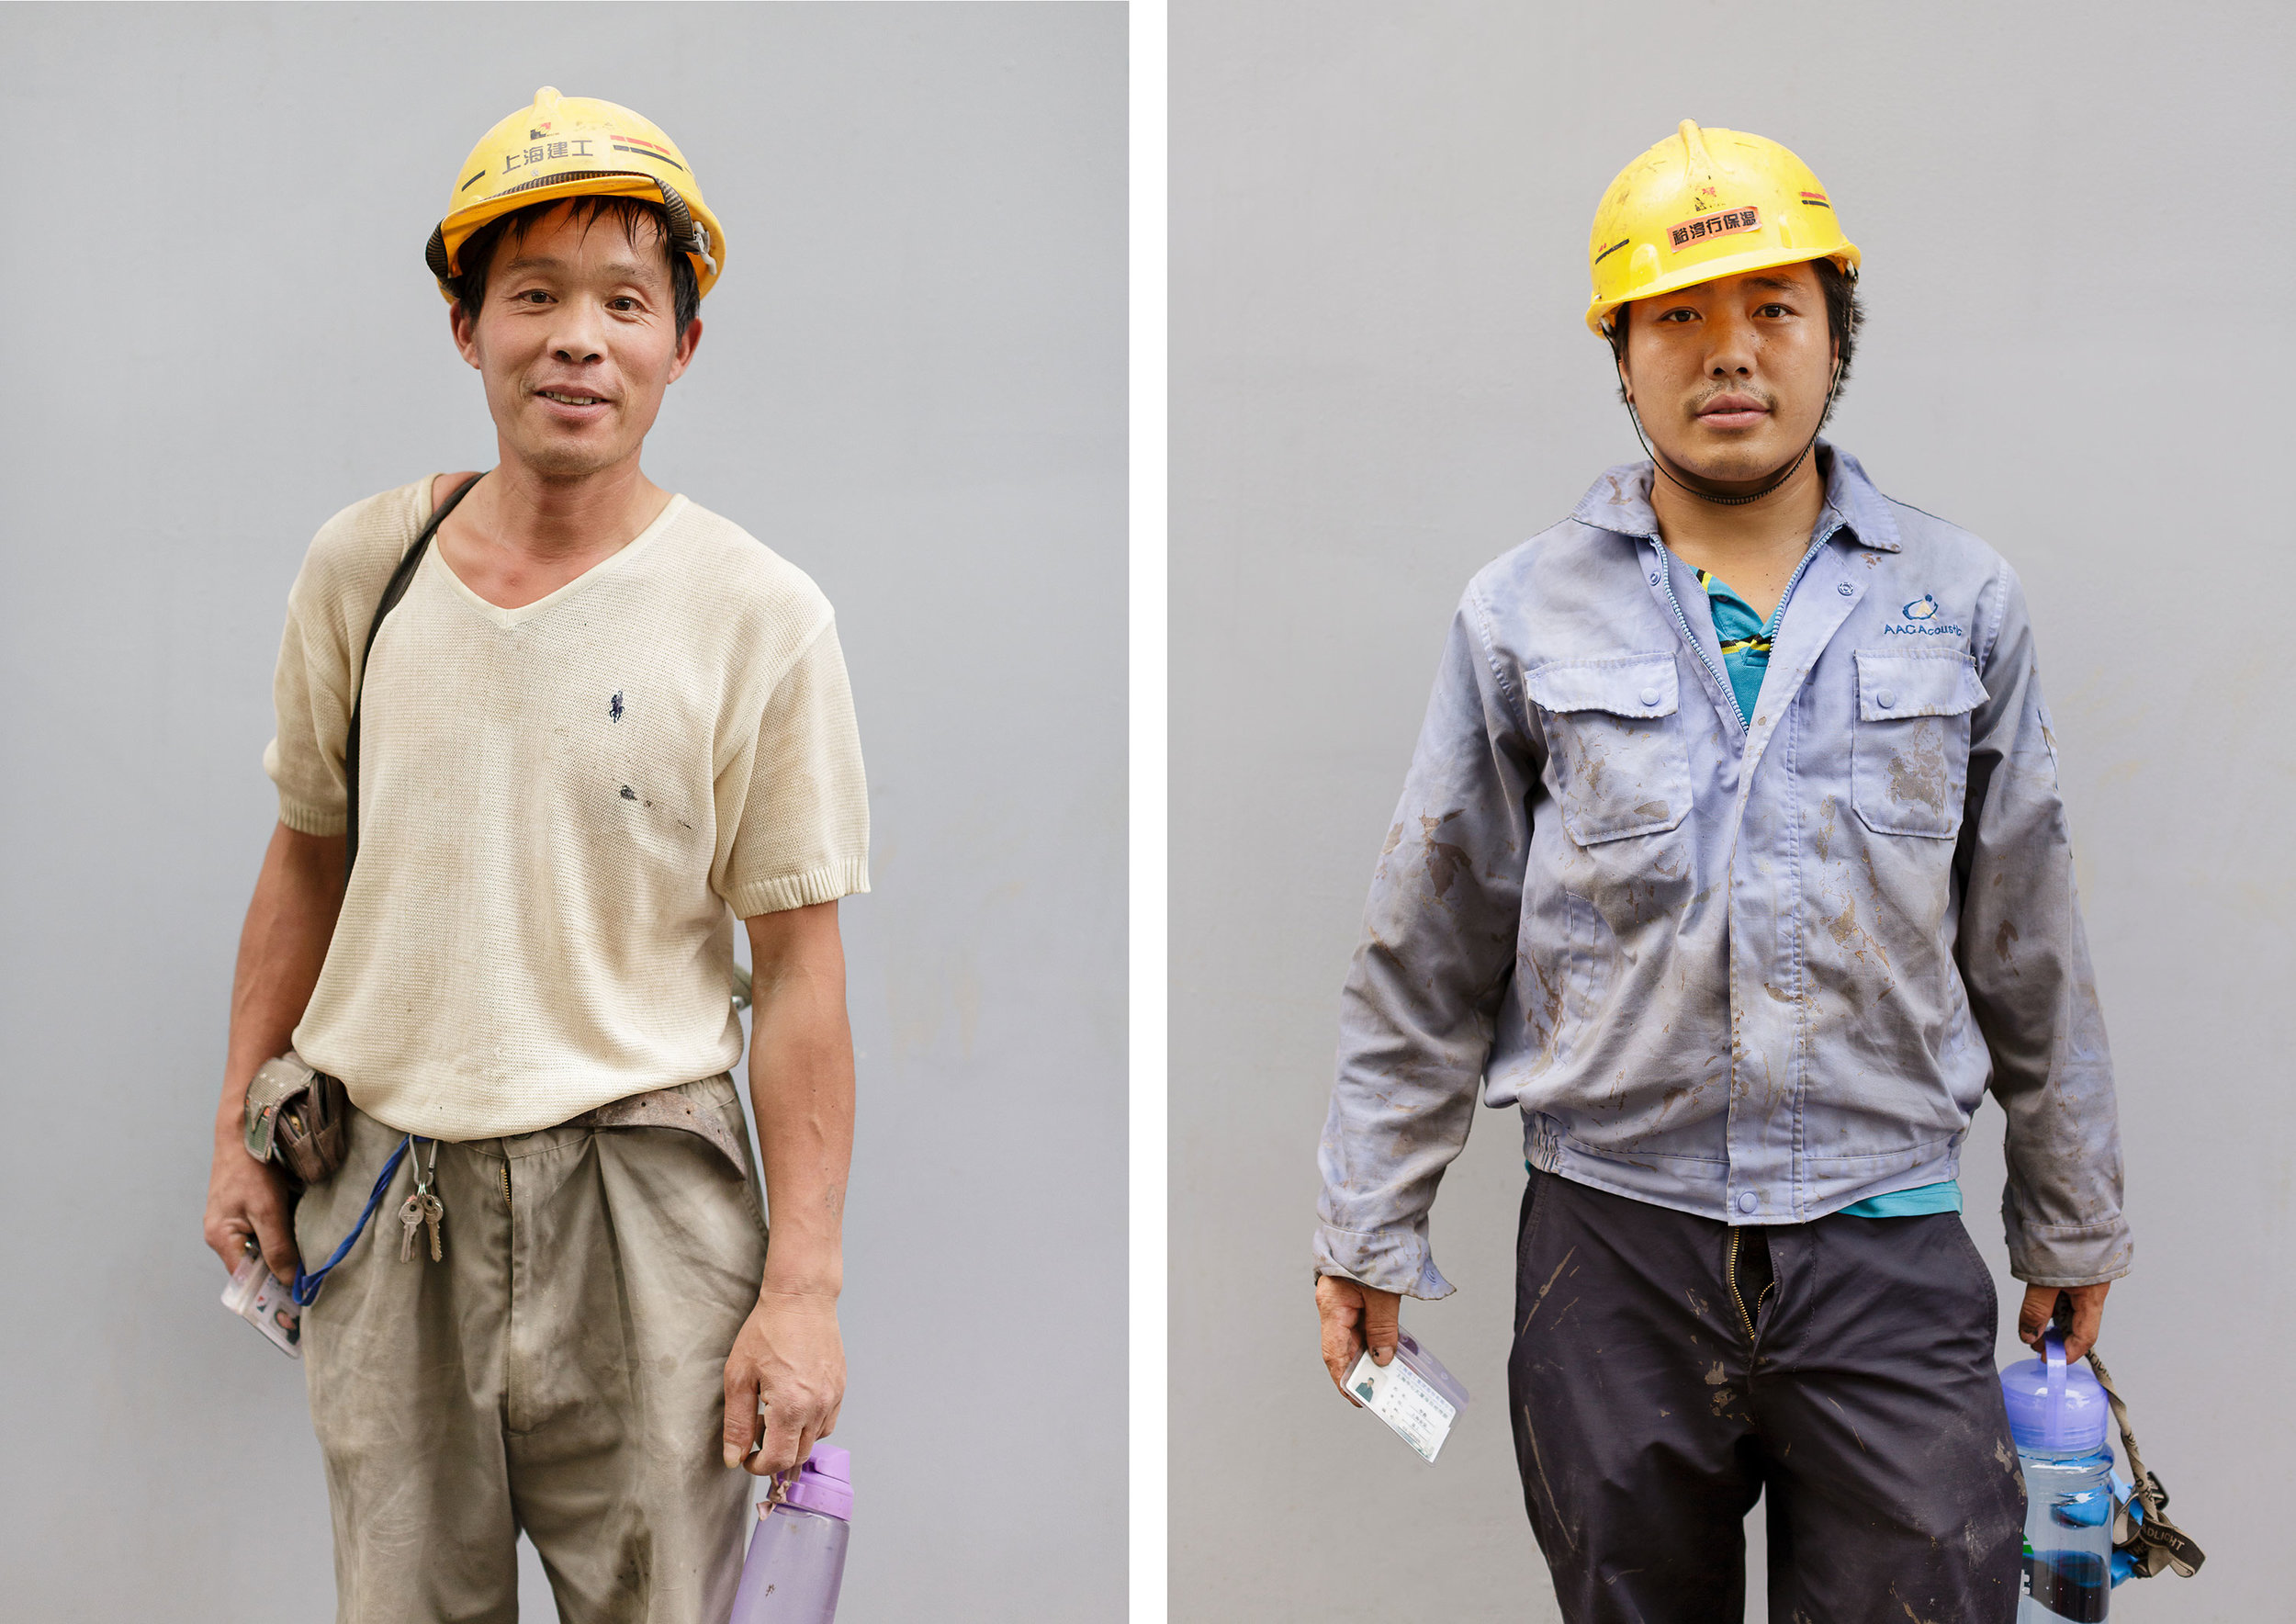 Shanghai_Tower-workers-and-building14.jpg